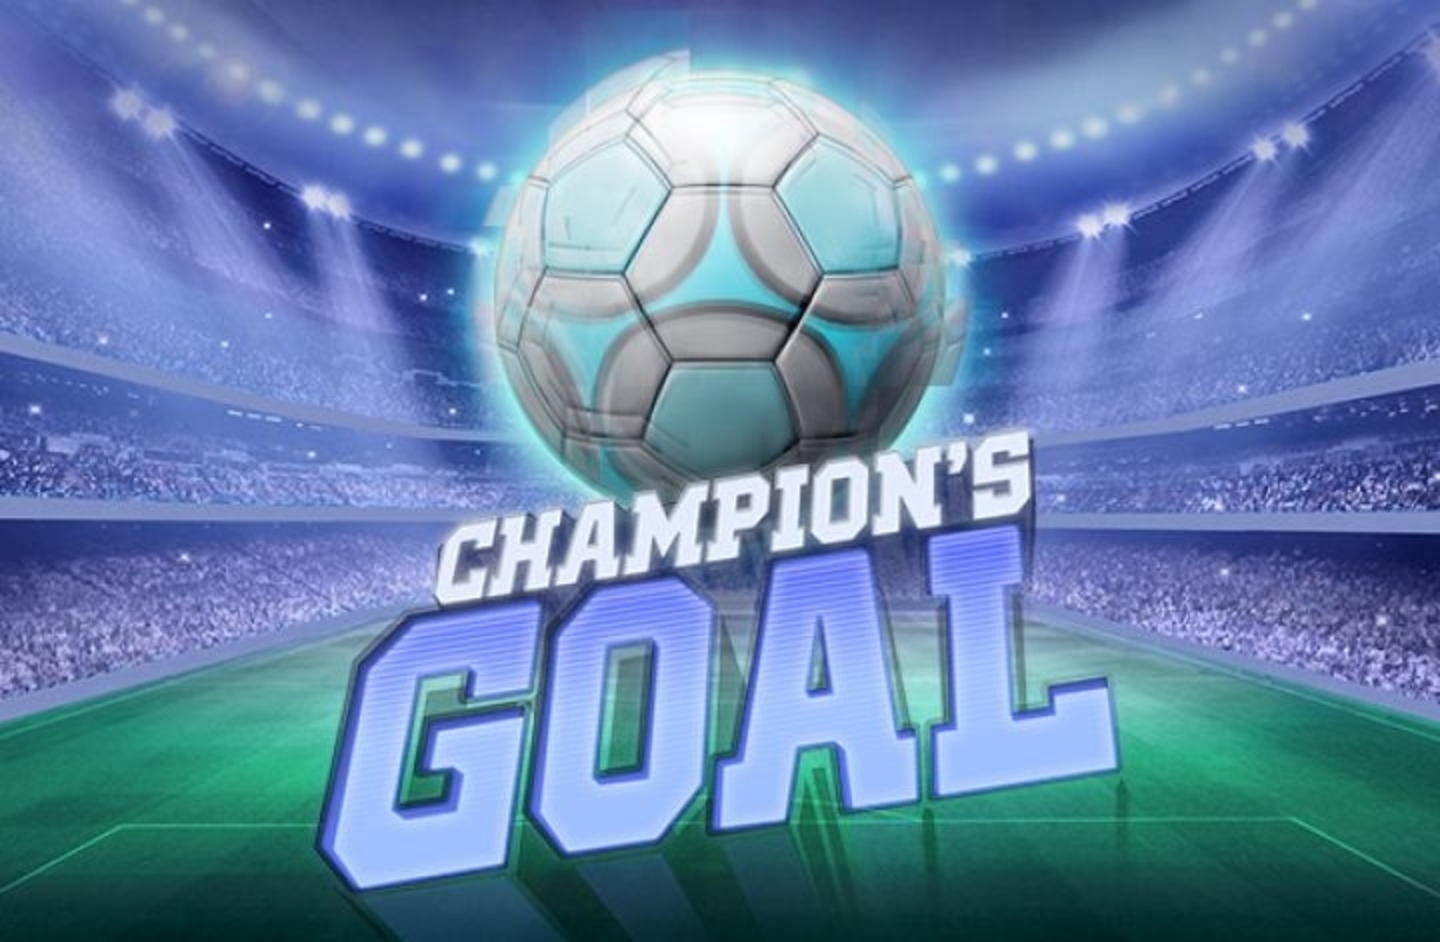 The Champion's Goal Online Slot Demo Game by ELK Studios